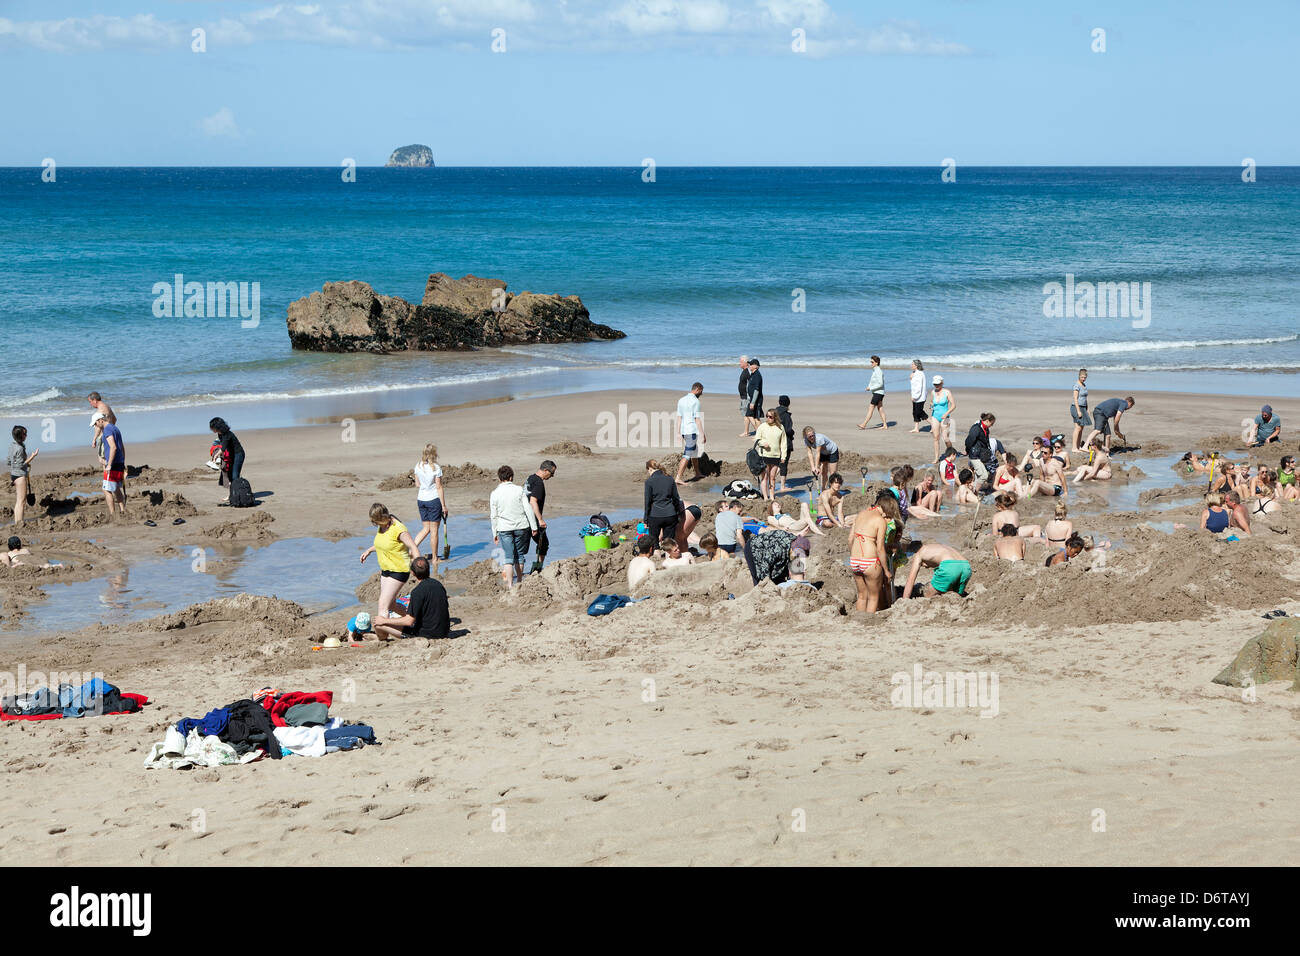 Hot water beach,Coromandel,near Hahei, Northern island,New Zealand Stock Photo